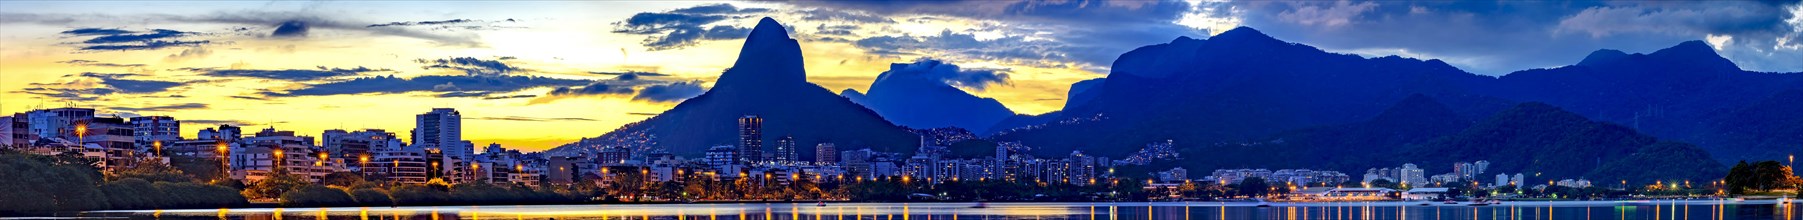 Panoramic image of summer sunset seen from the lagoon Rodrigo de Freitas with the buildings of the city of Rio de Janeiro